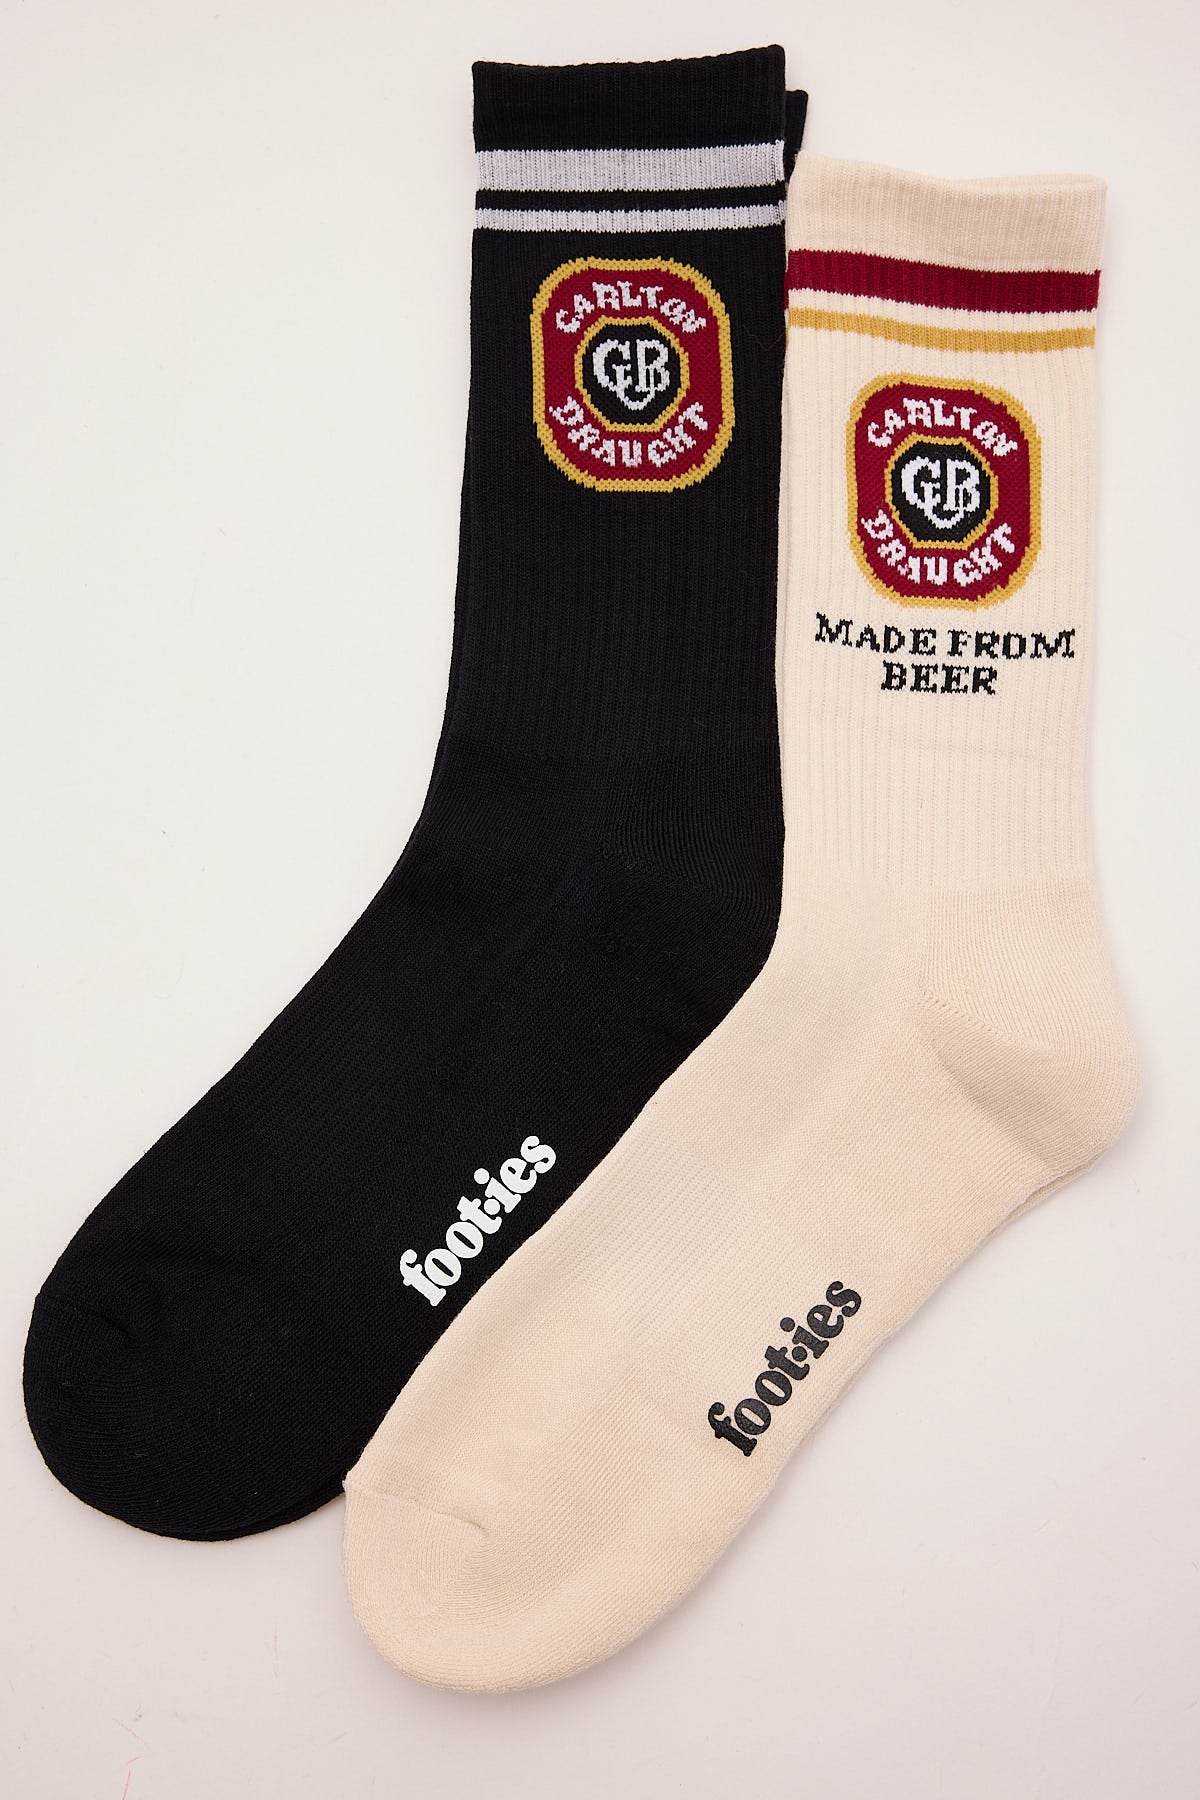 Footies Carlton Draught Made from Beer 2pk Sock Cream/Black